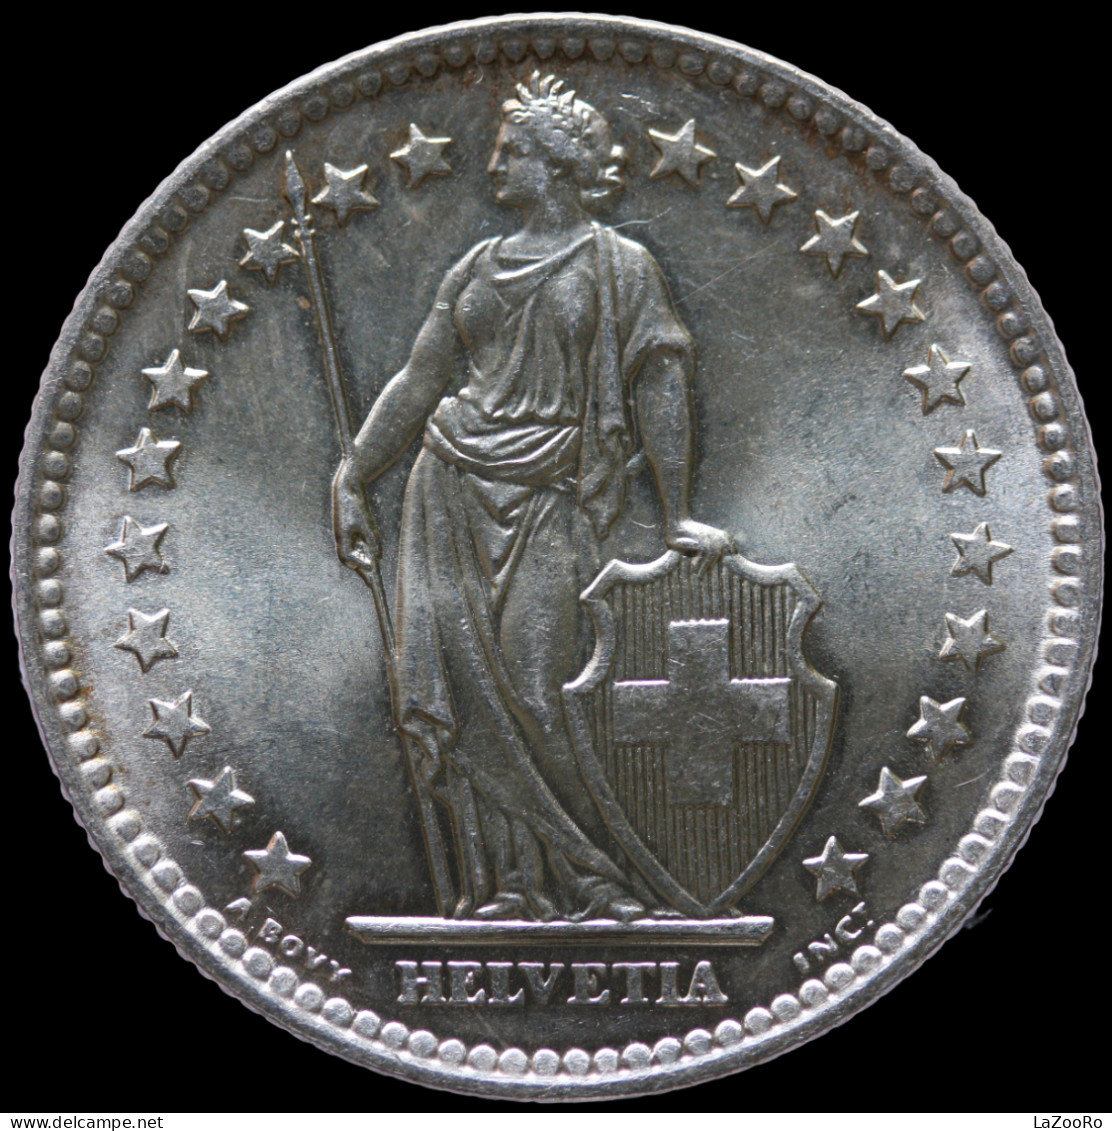 LaZooRo: Switzerland 2 Francs 1961 UNC - Silver - 2 Franken